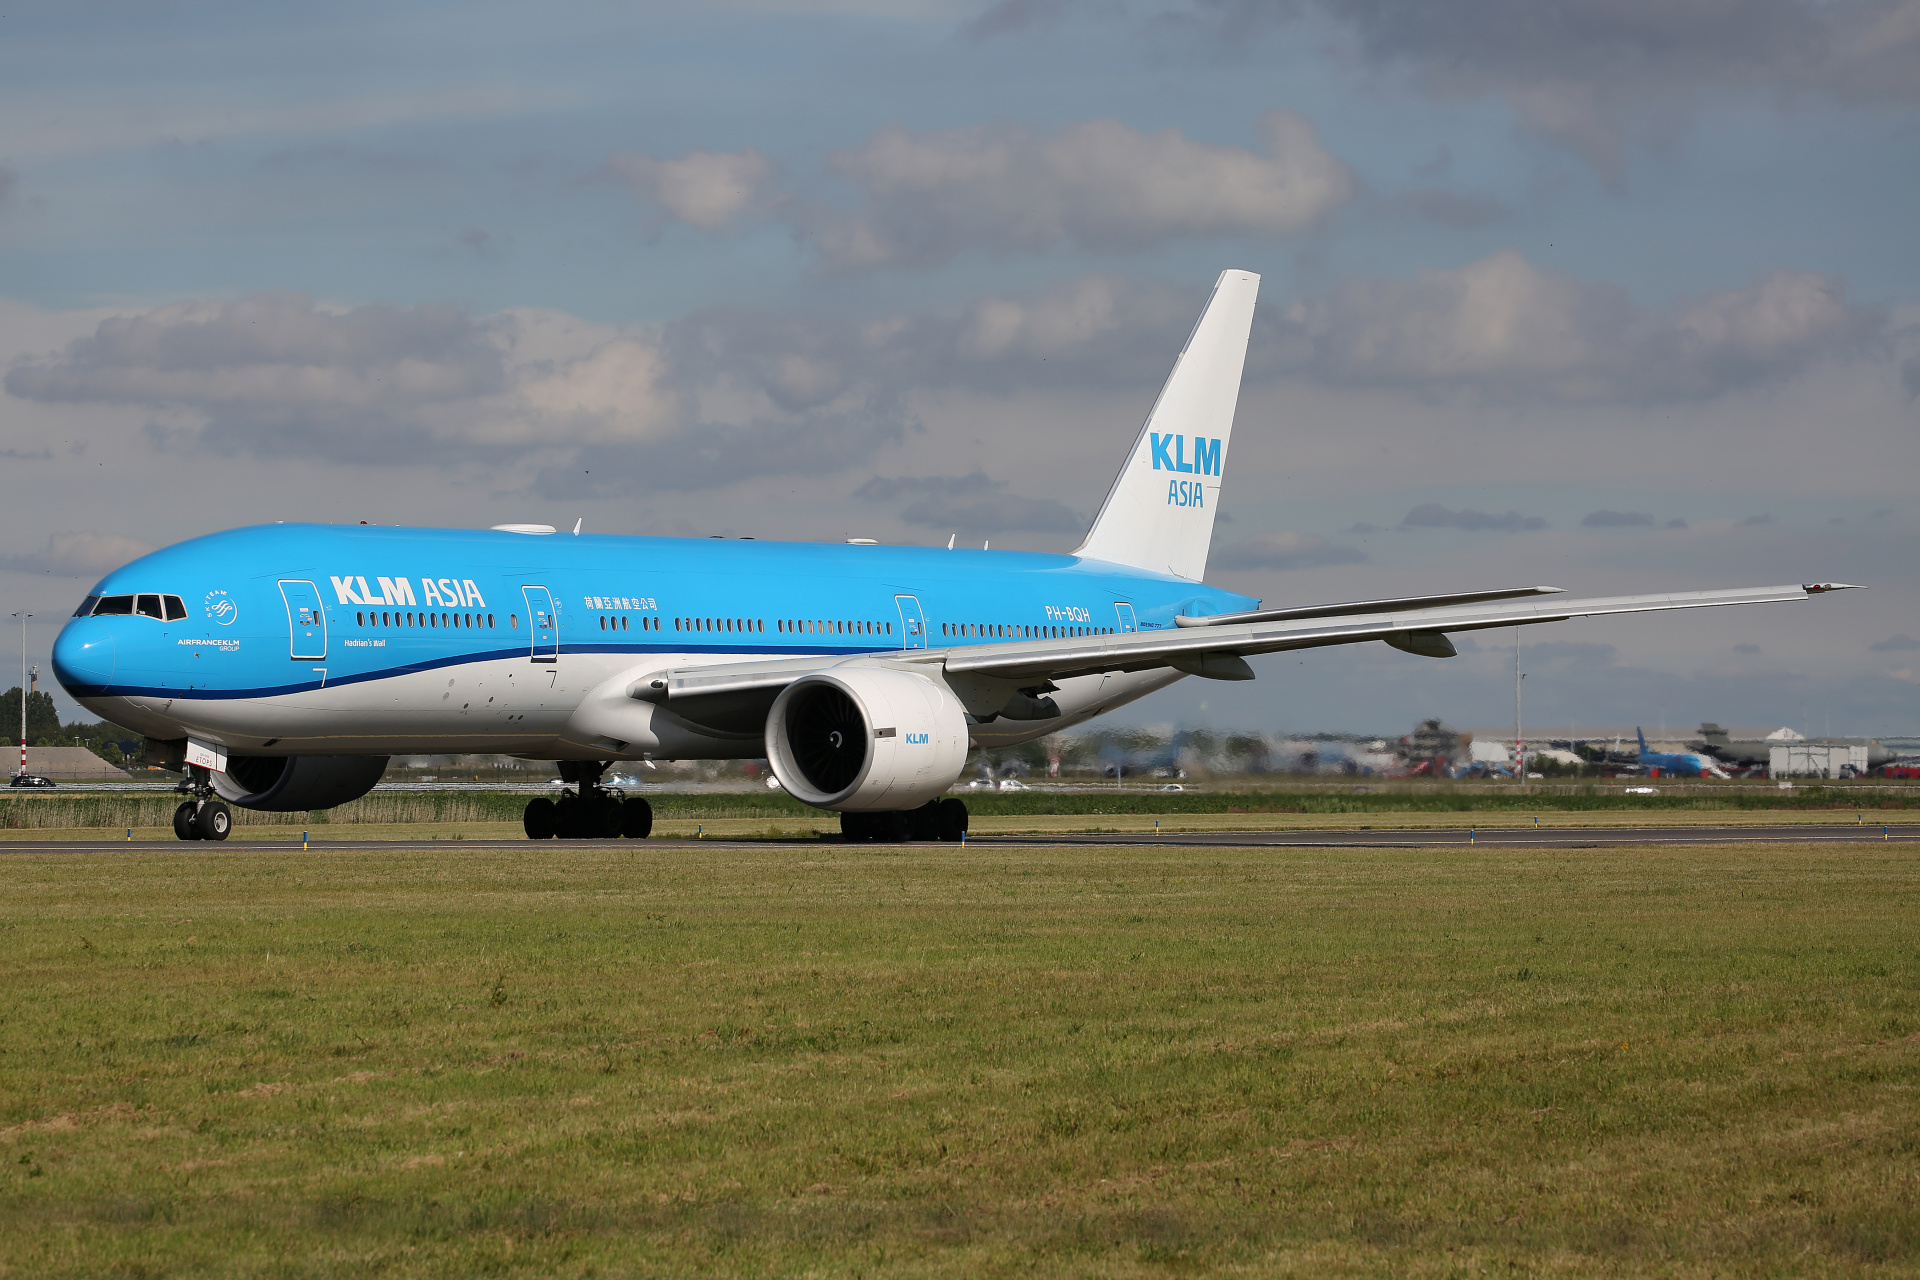 PH-BQH (KLM Asia livery) (Aircraft » Schiphol Spotting » Boeing 777-200/-ER » KLM Royal Dutch Airlines)